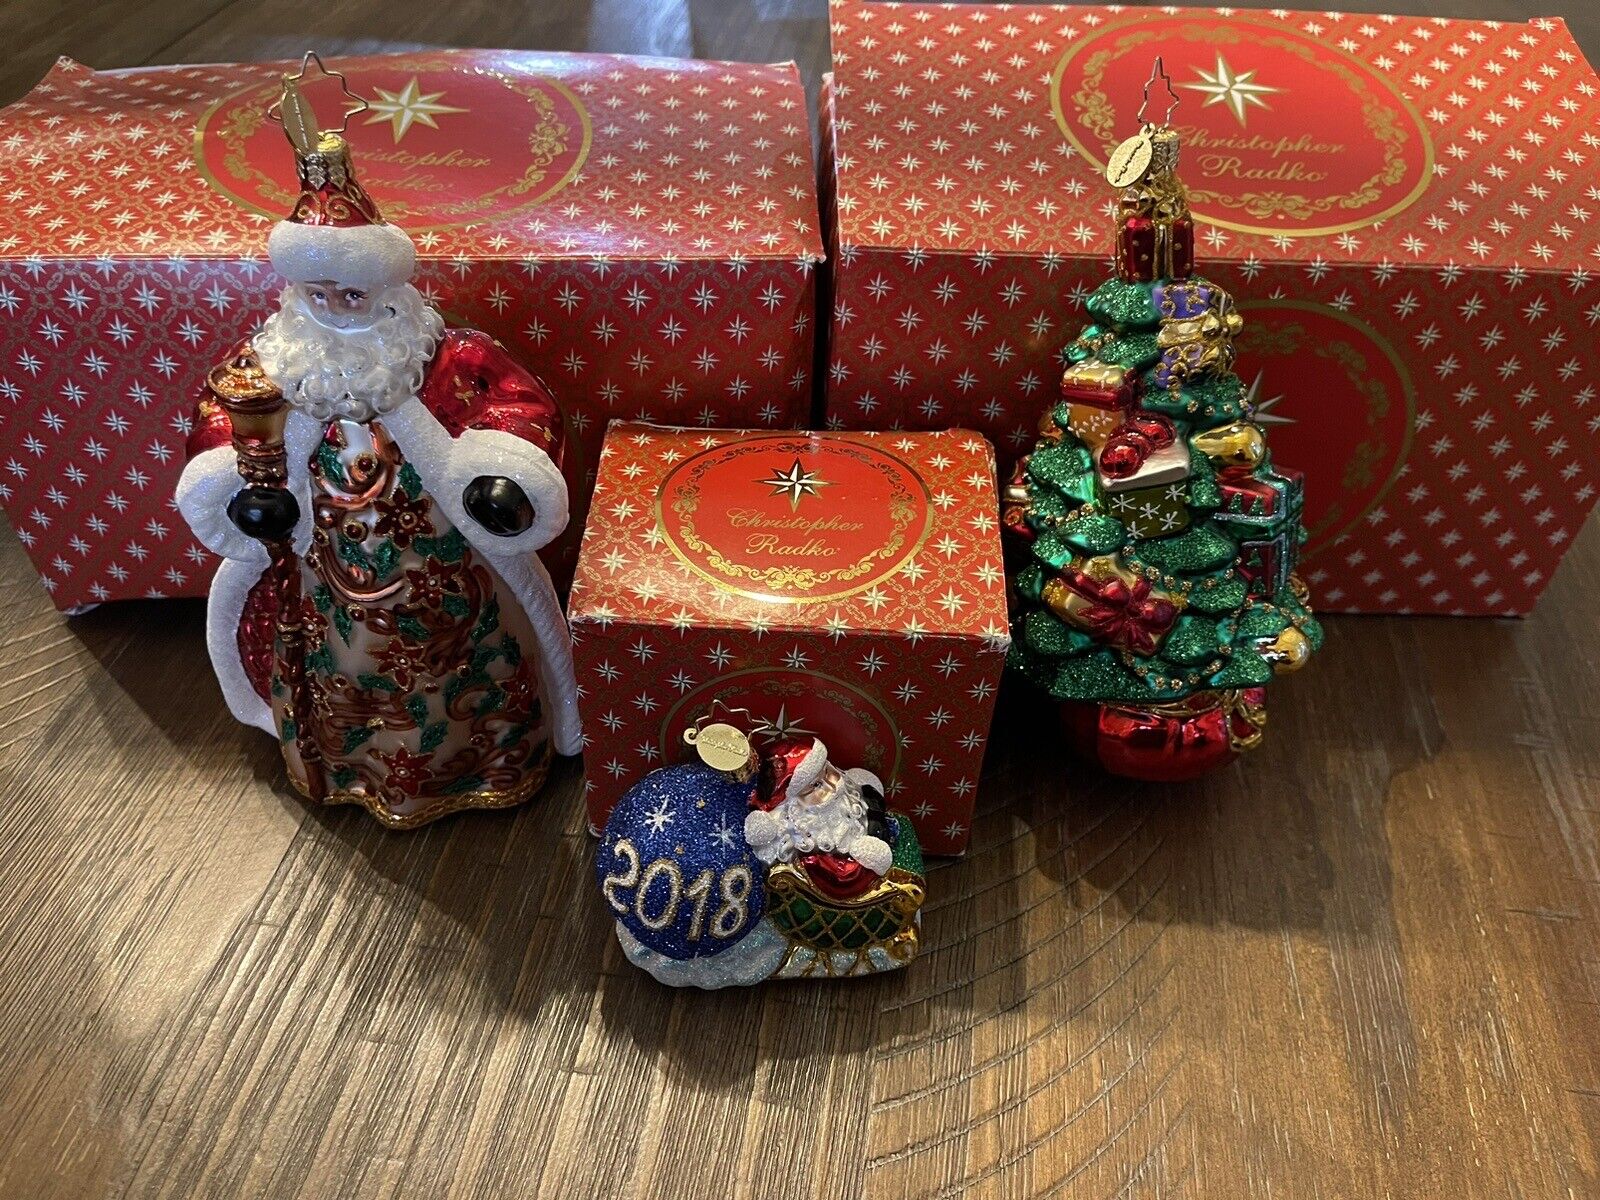 3 Christopher Radke Christmas Ornaments - Santa, Christmas Tree, W Boxes And Tag